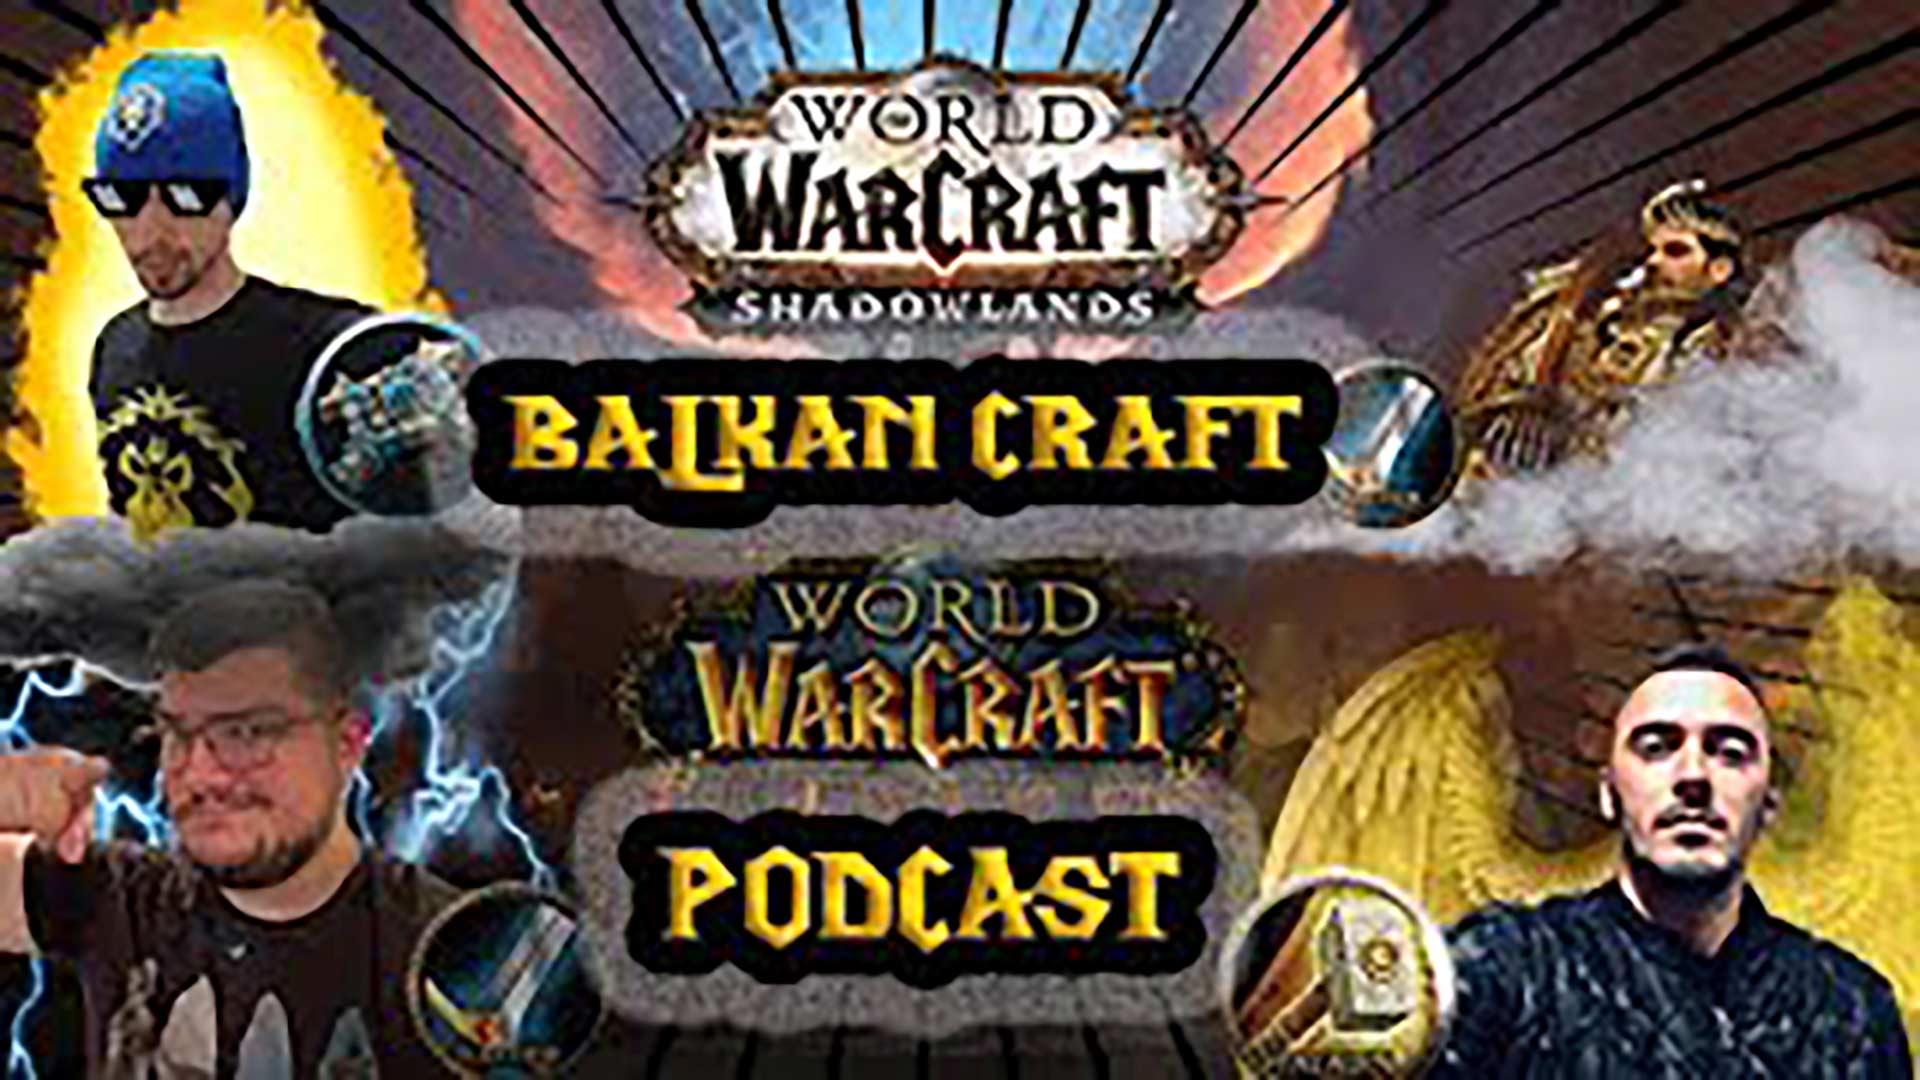 Balkan craft podcast svet warcrafta Outlander